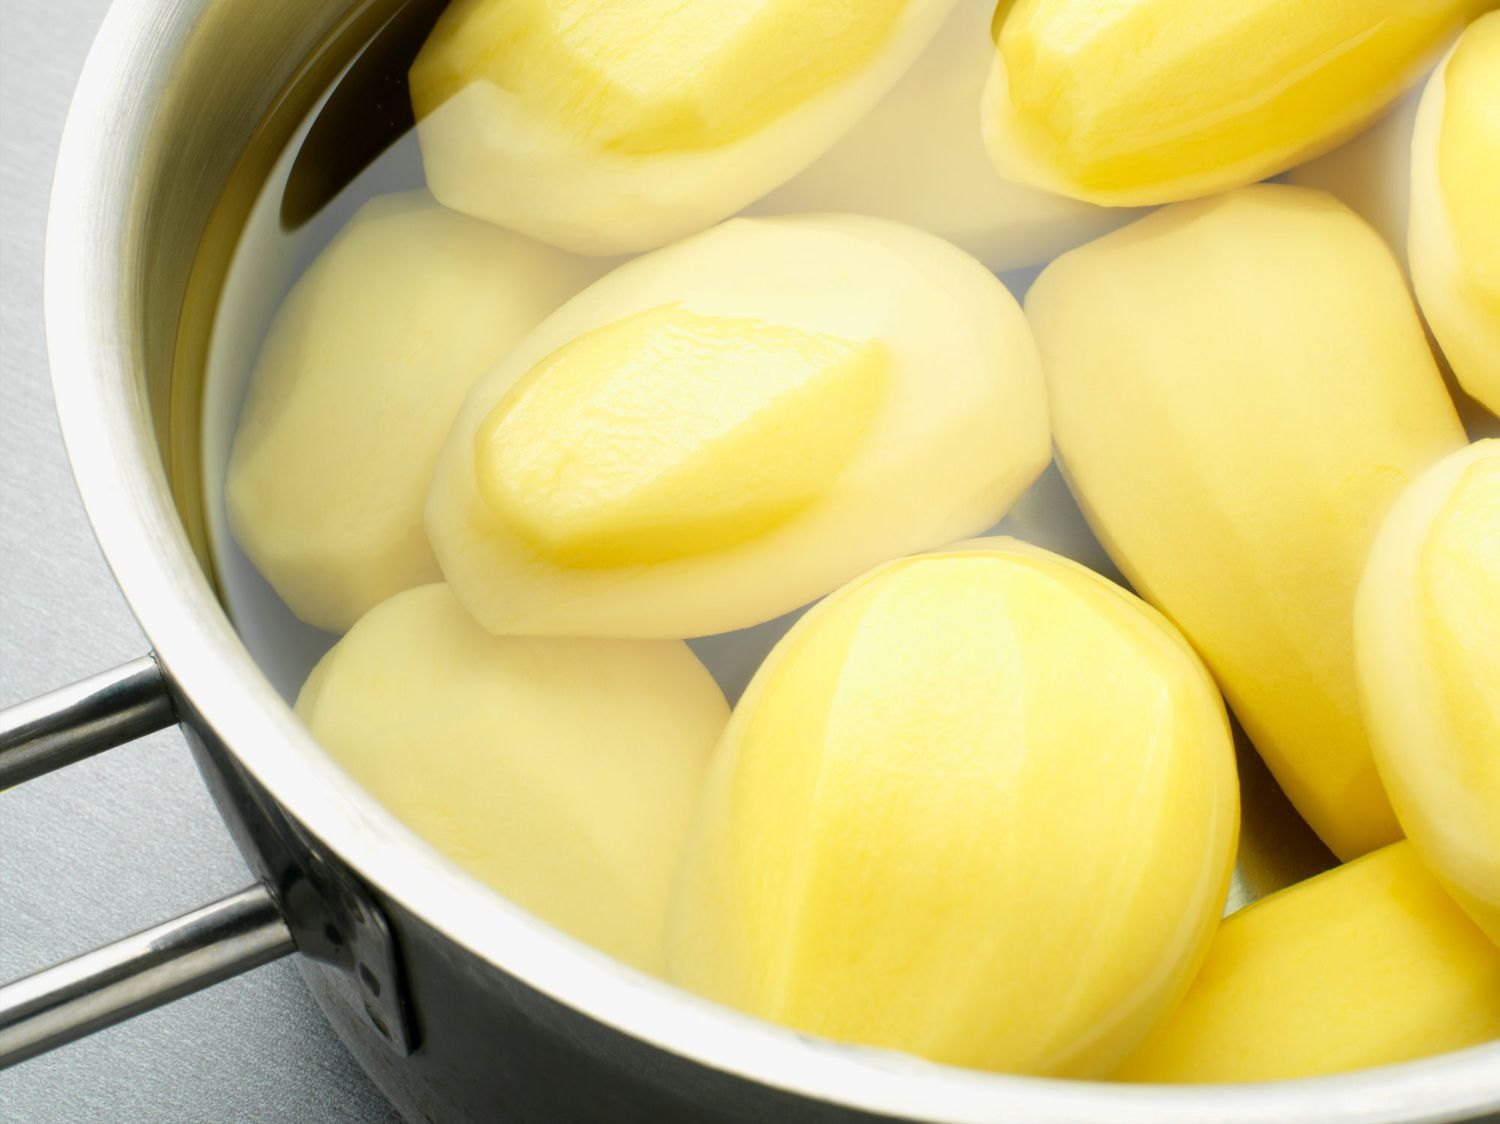 Potatoes in a saucepan